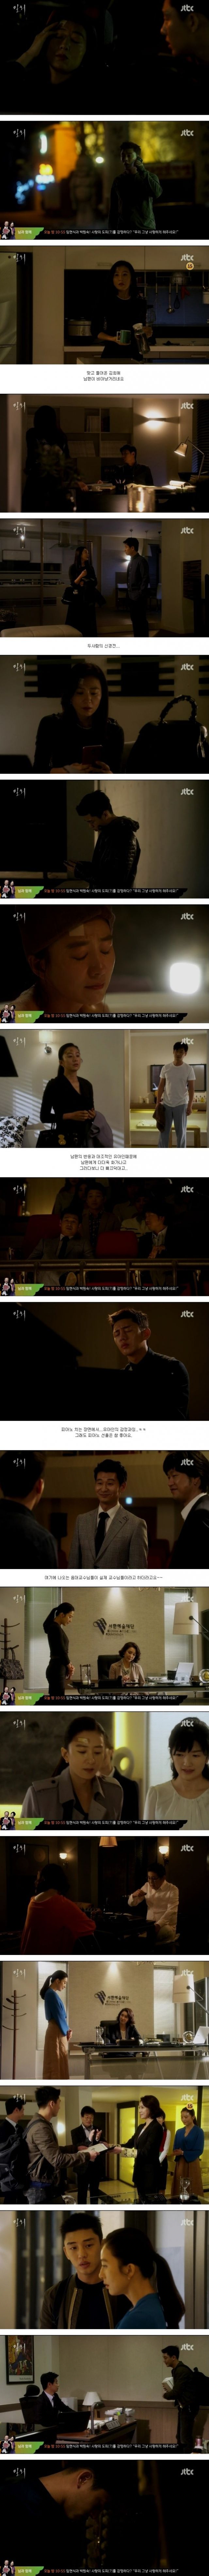 episode 7 captures for the Korean drama 'Secret Love Affair'